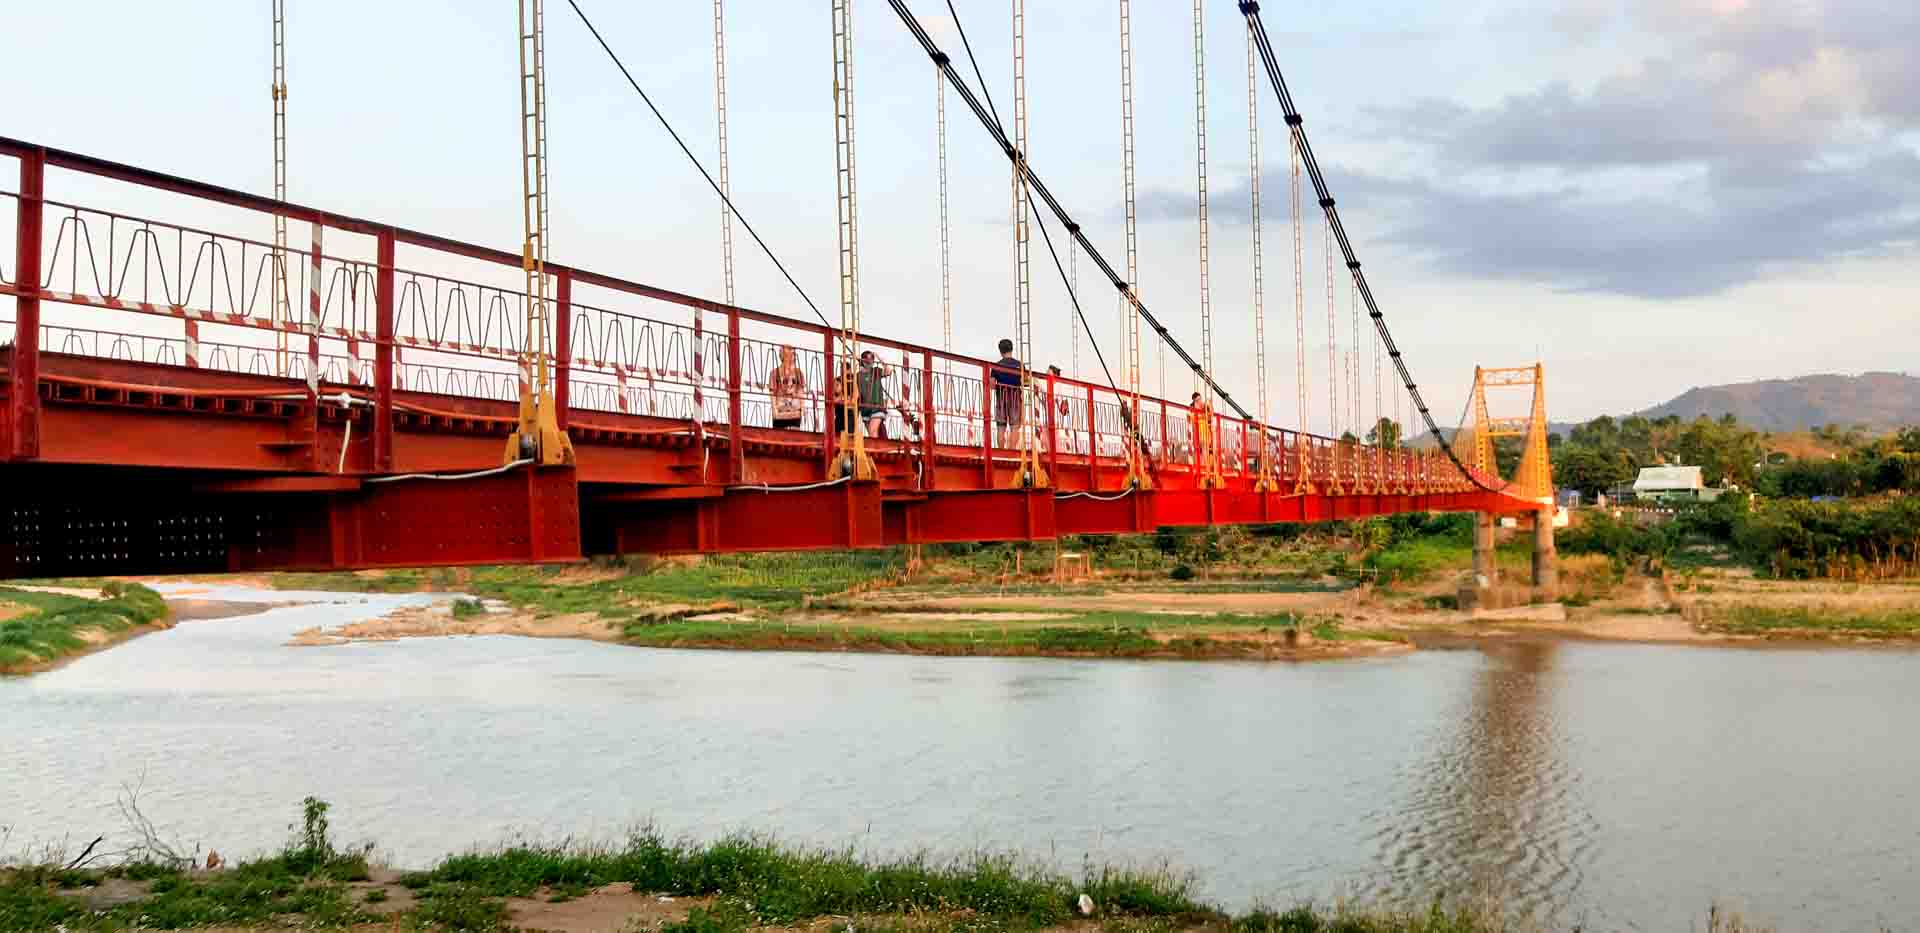 Cầu treo Kon Klor (Điểm du lịch Tp Kon Tum)